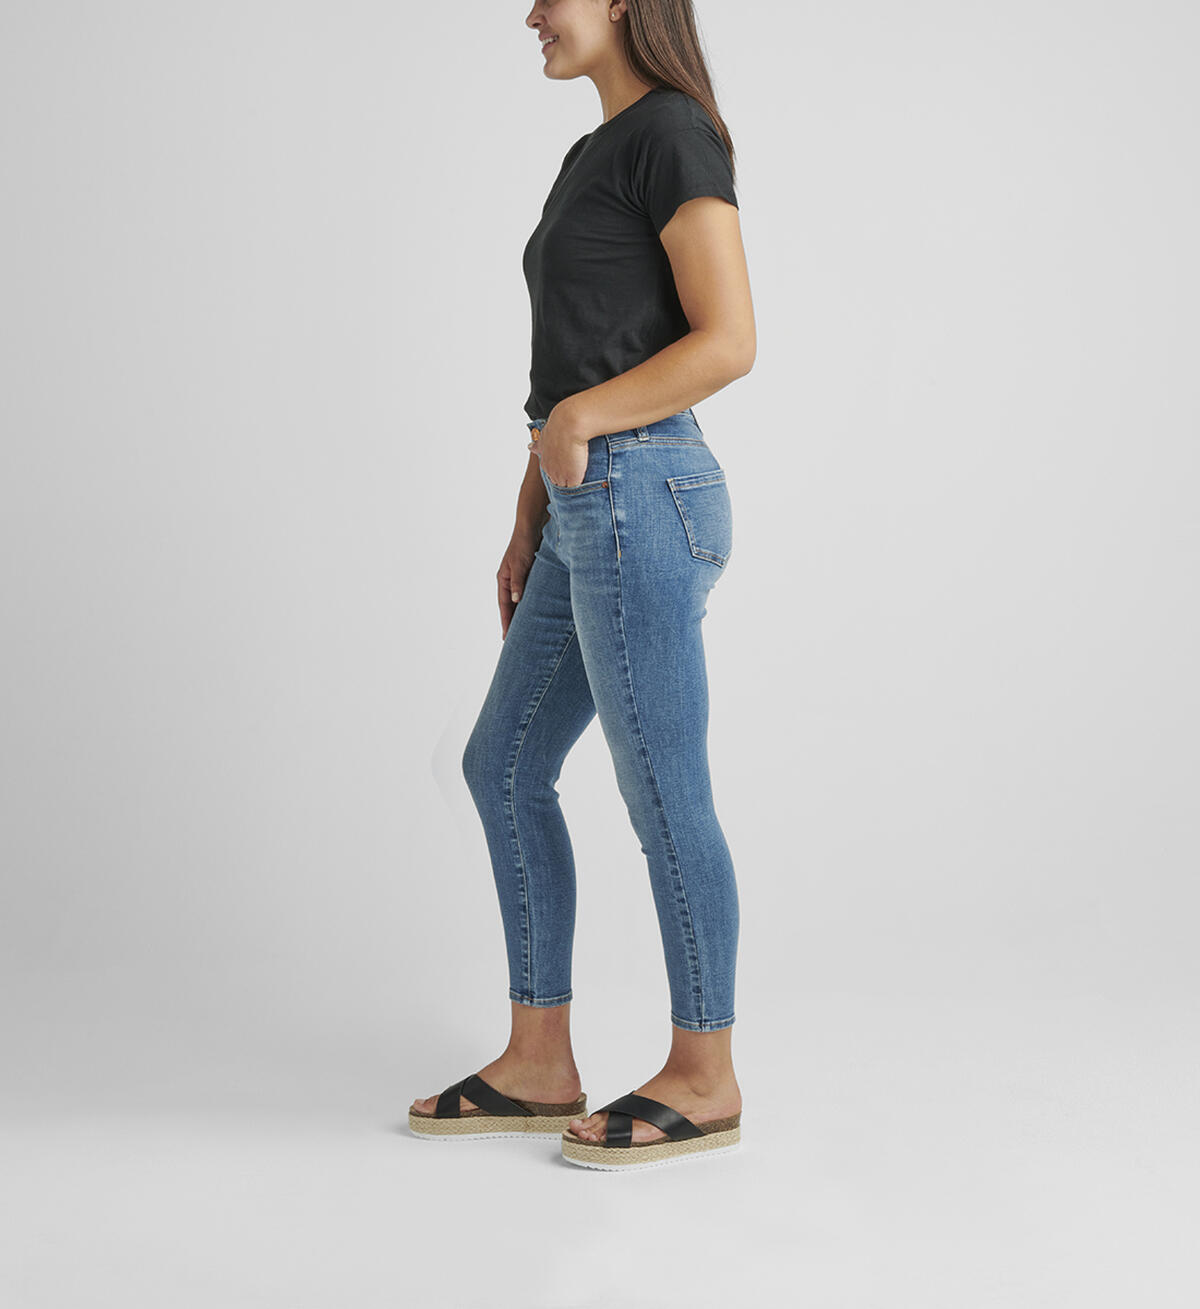 Valentina High Rise Skinny Crop Pull-On Jeans Petite, , hi-res image number 2